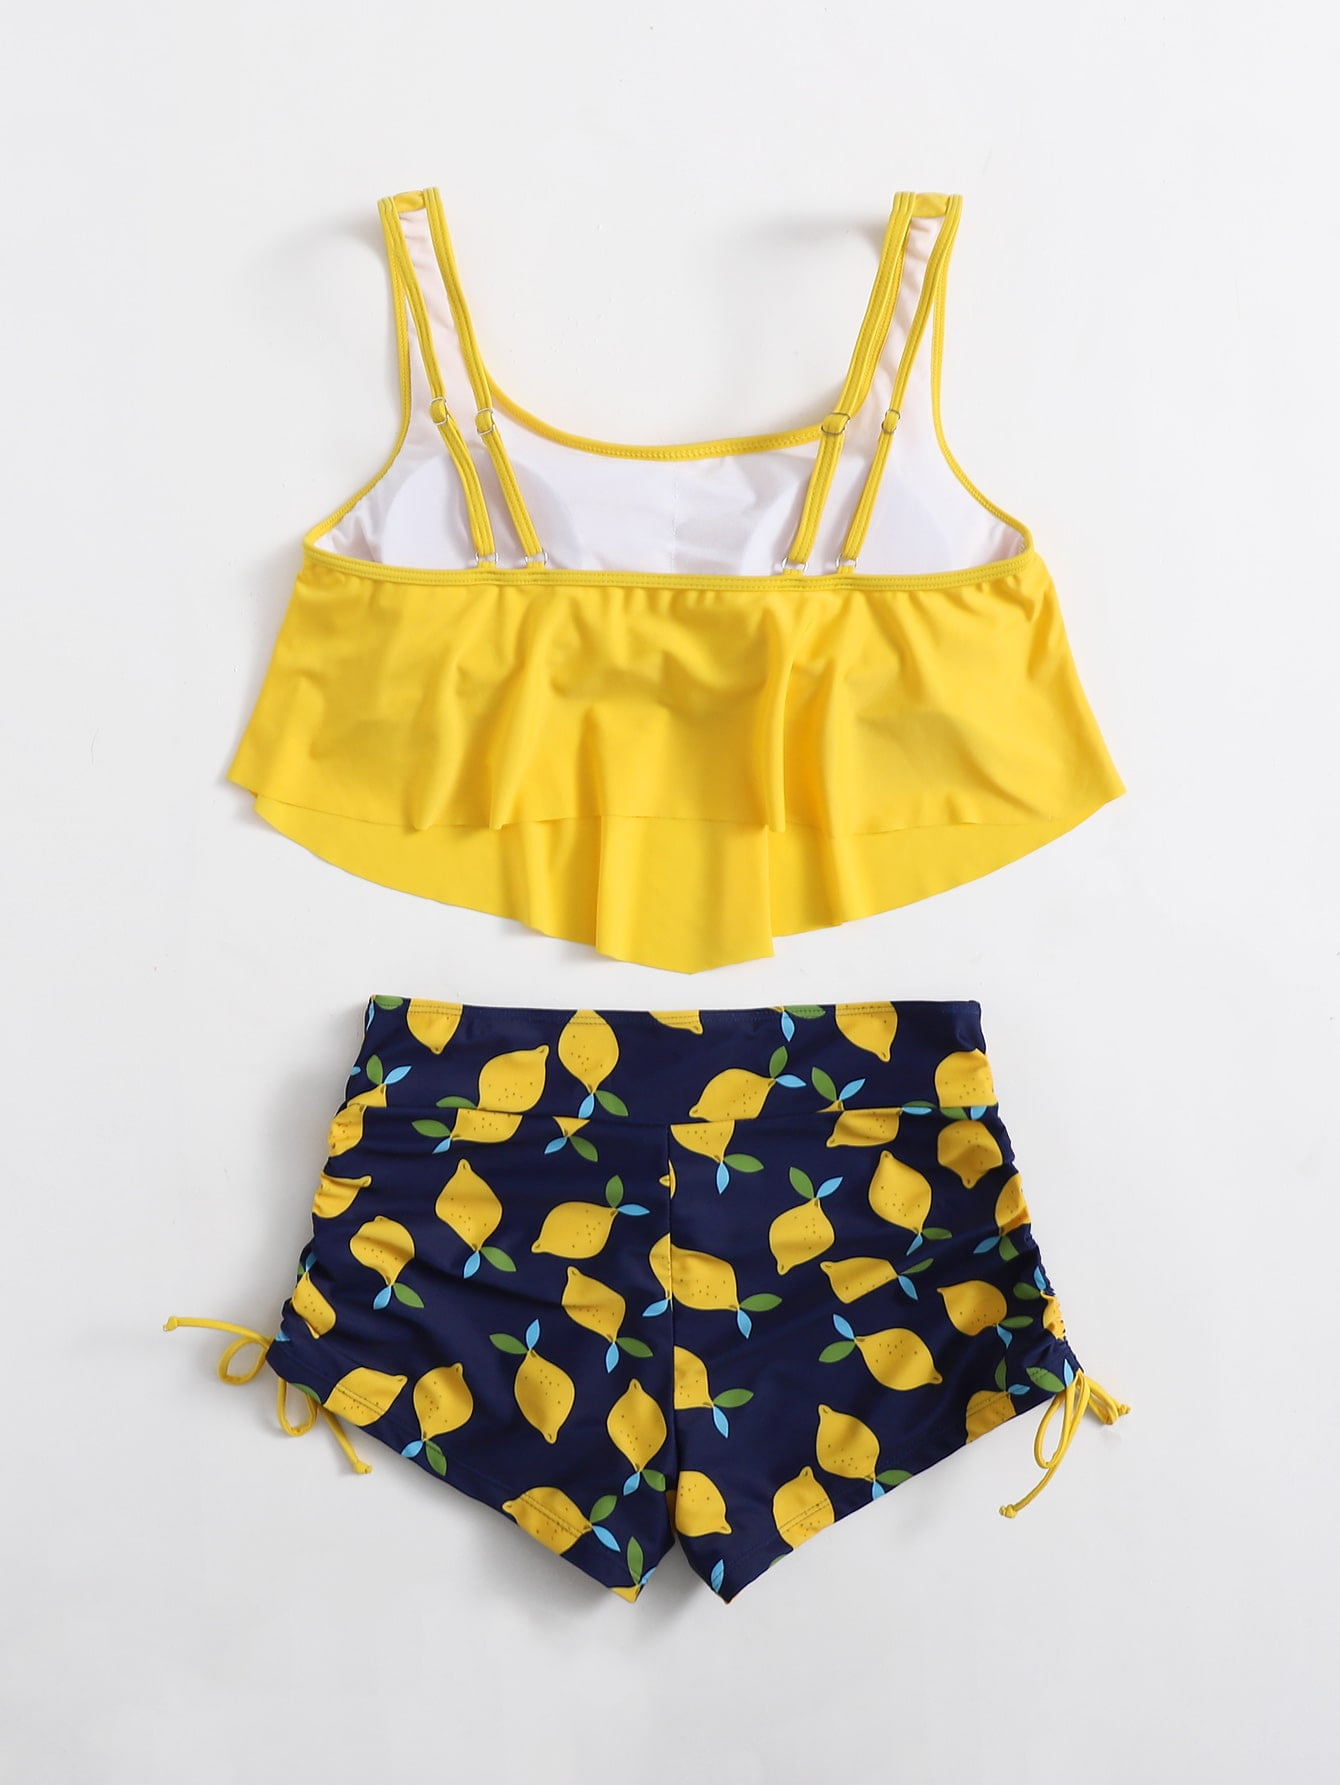 OLRIK Clothing - Women's Plus Size Lemon Print Hanky Hem Bikini Swimsuit -  Walmart.com - Walmart.com